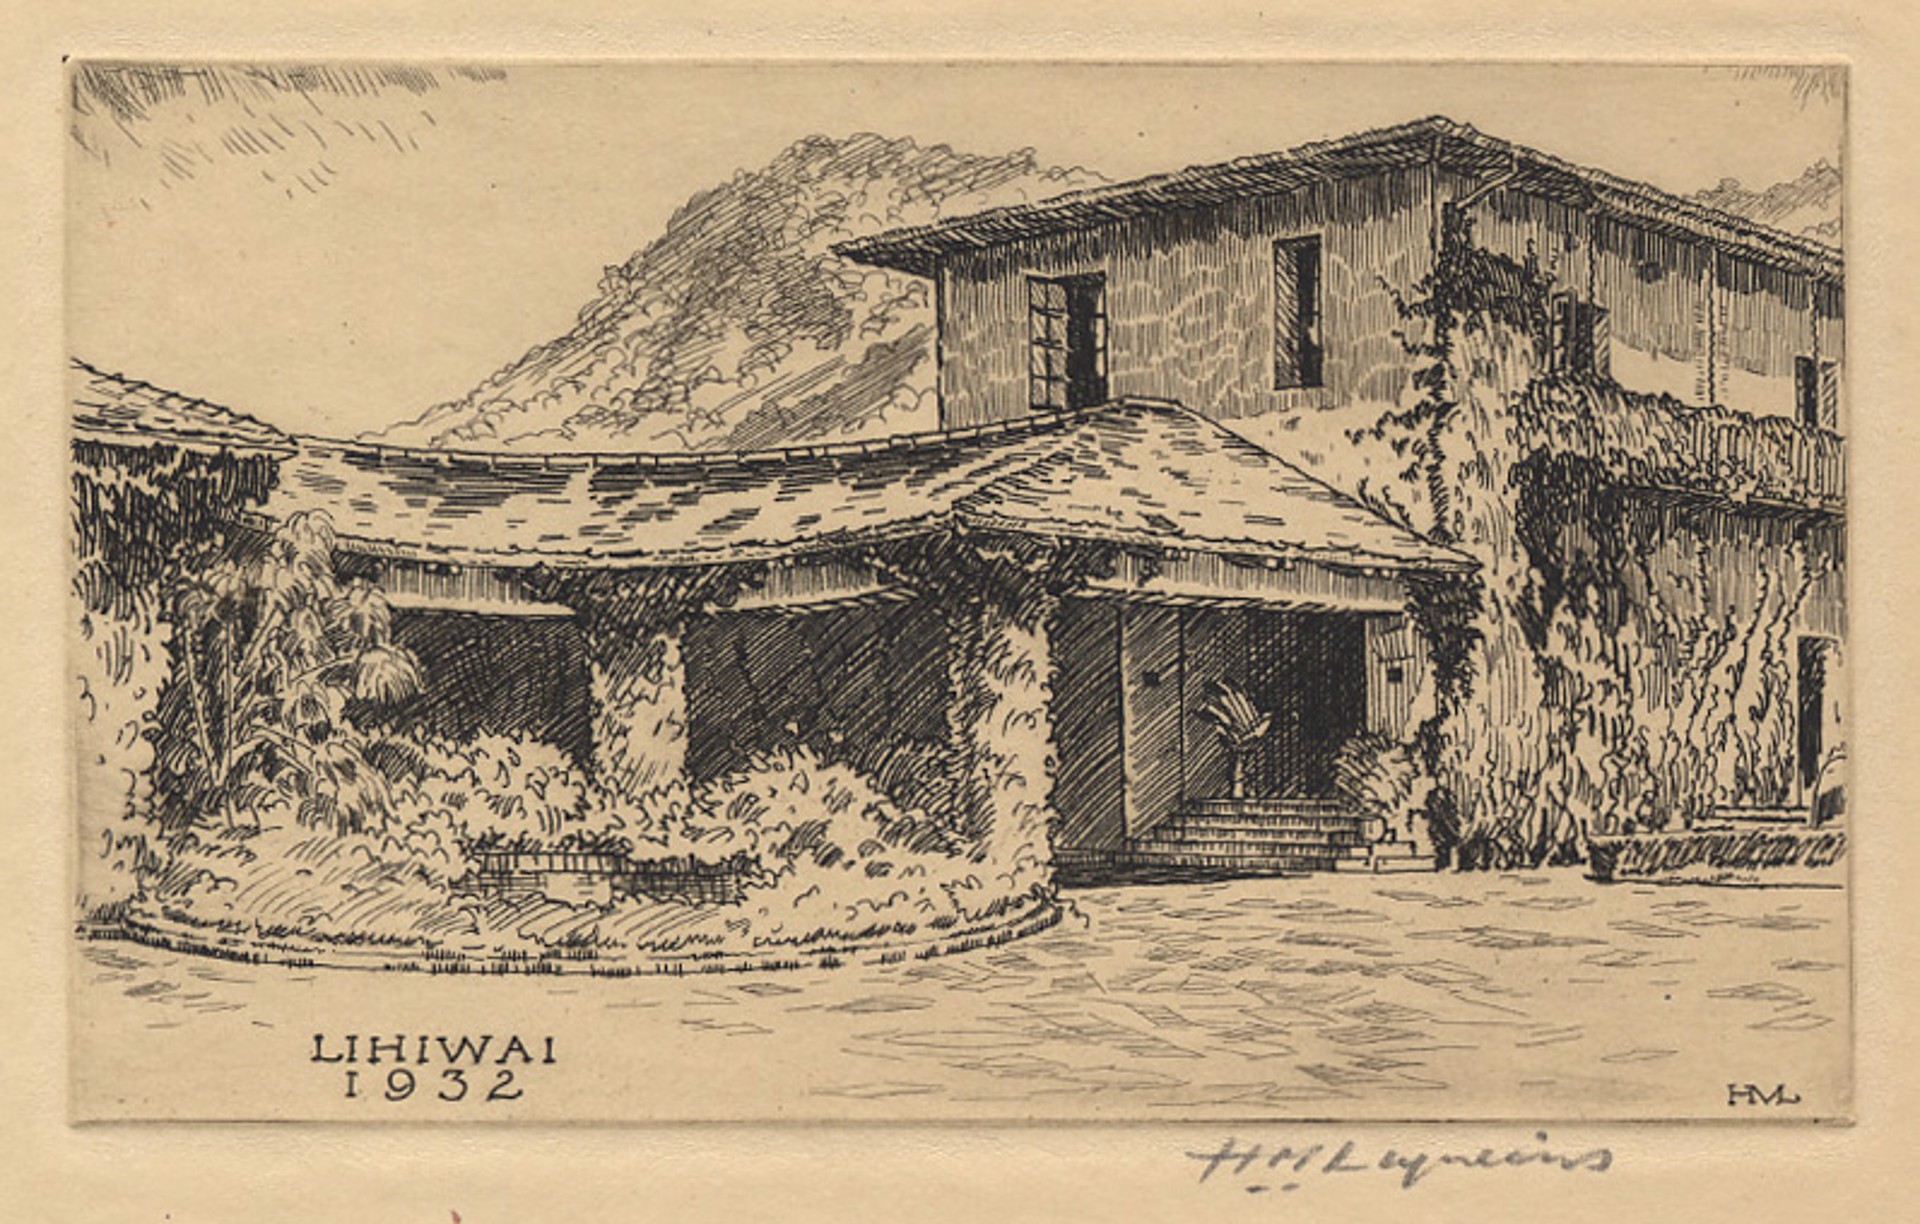 Lihiwai, 1932 by Huc Mazelet Luquiens